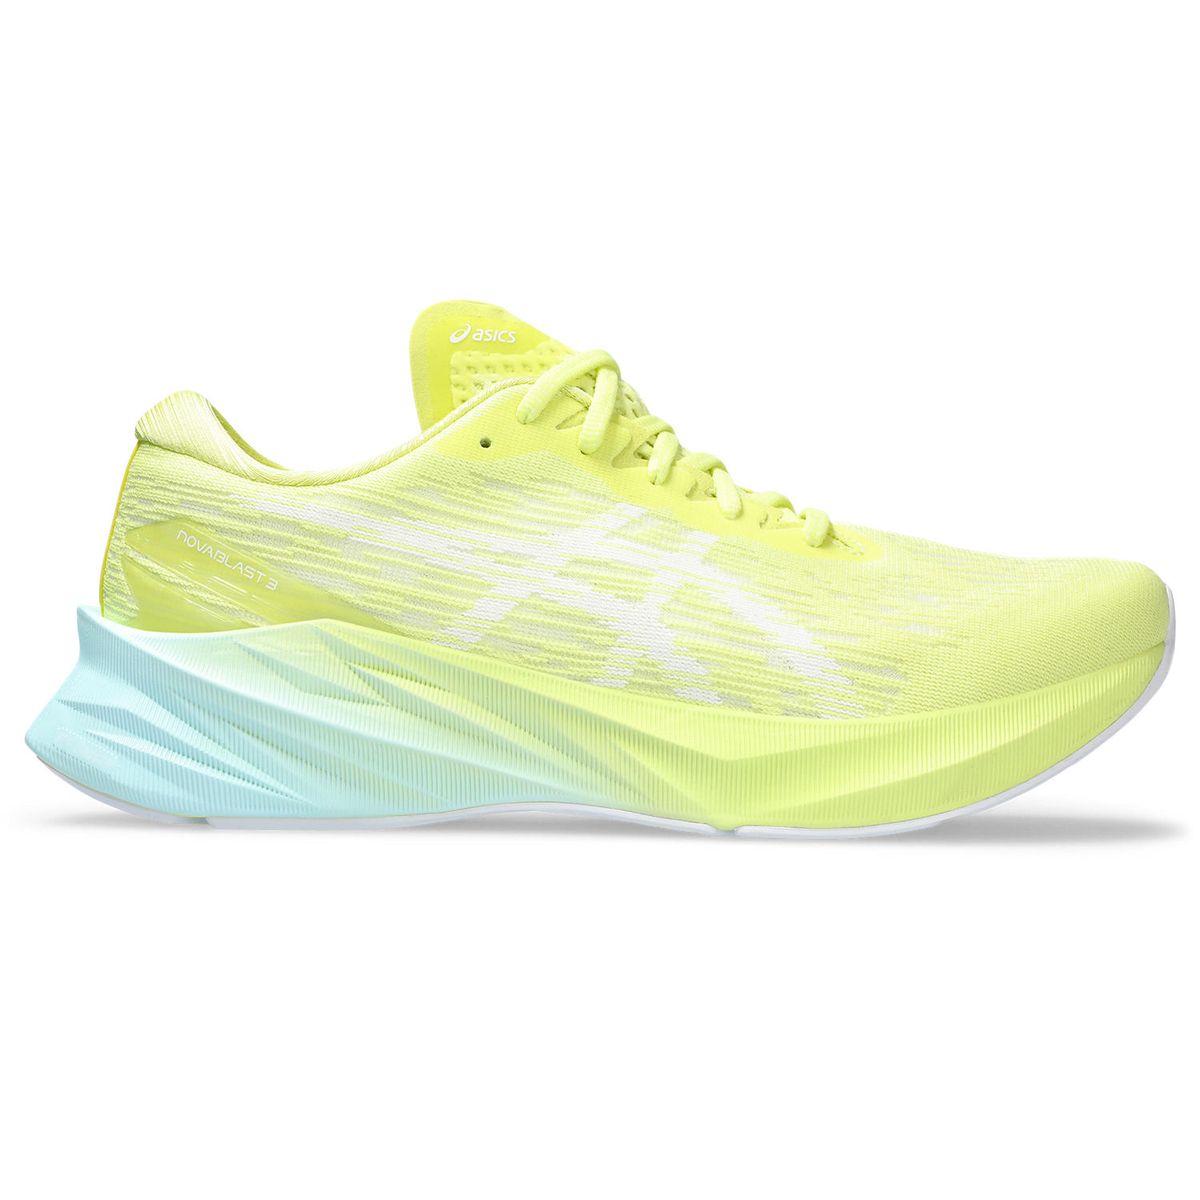 ASICS Men's Novablast 3 Road Running Shoes - Glow Yellow/White | Shop ...